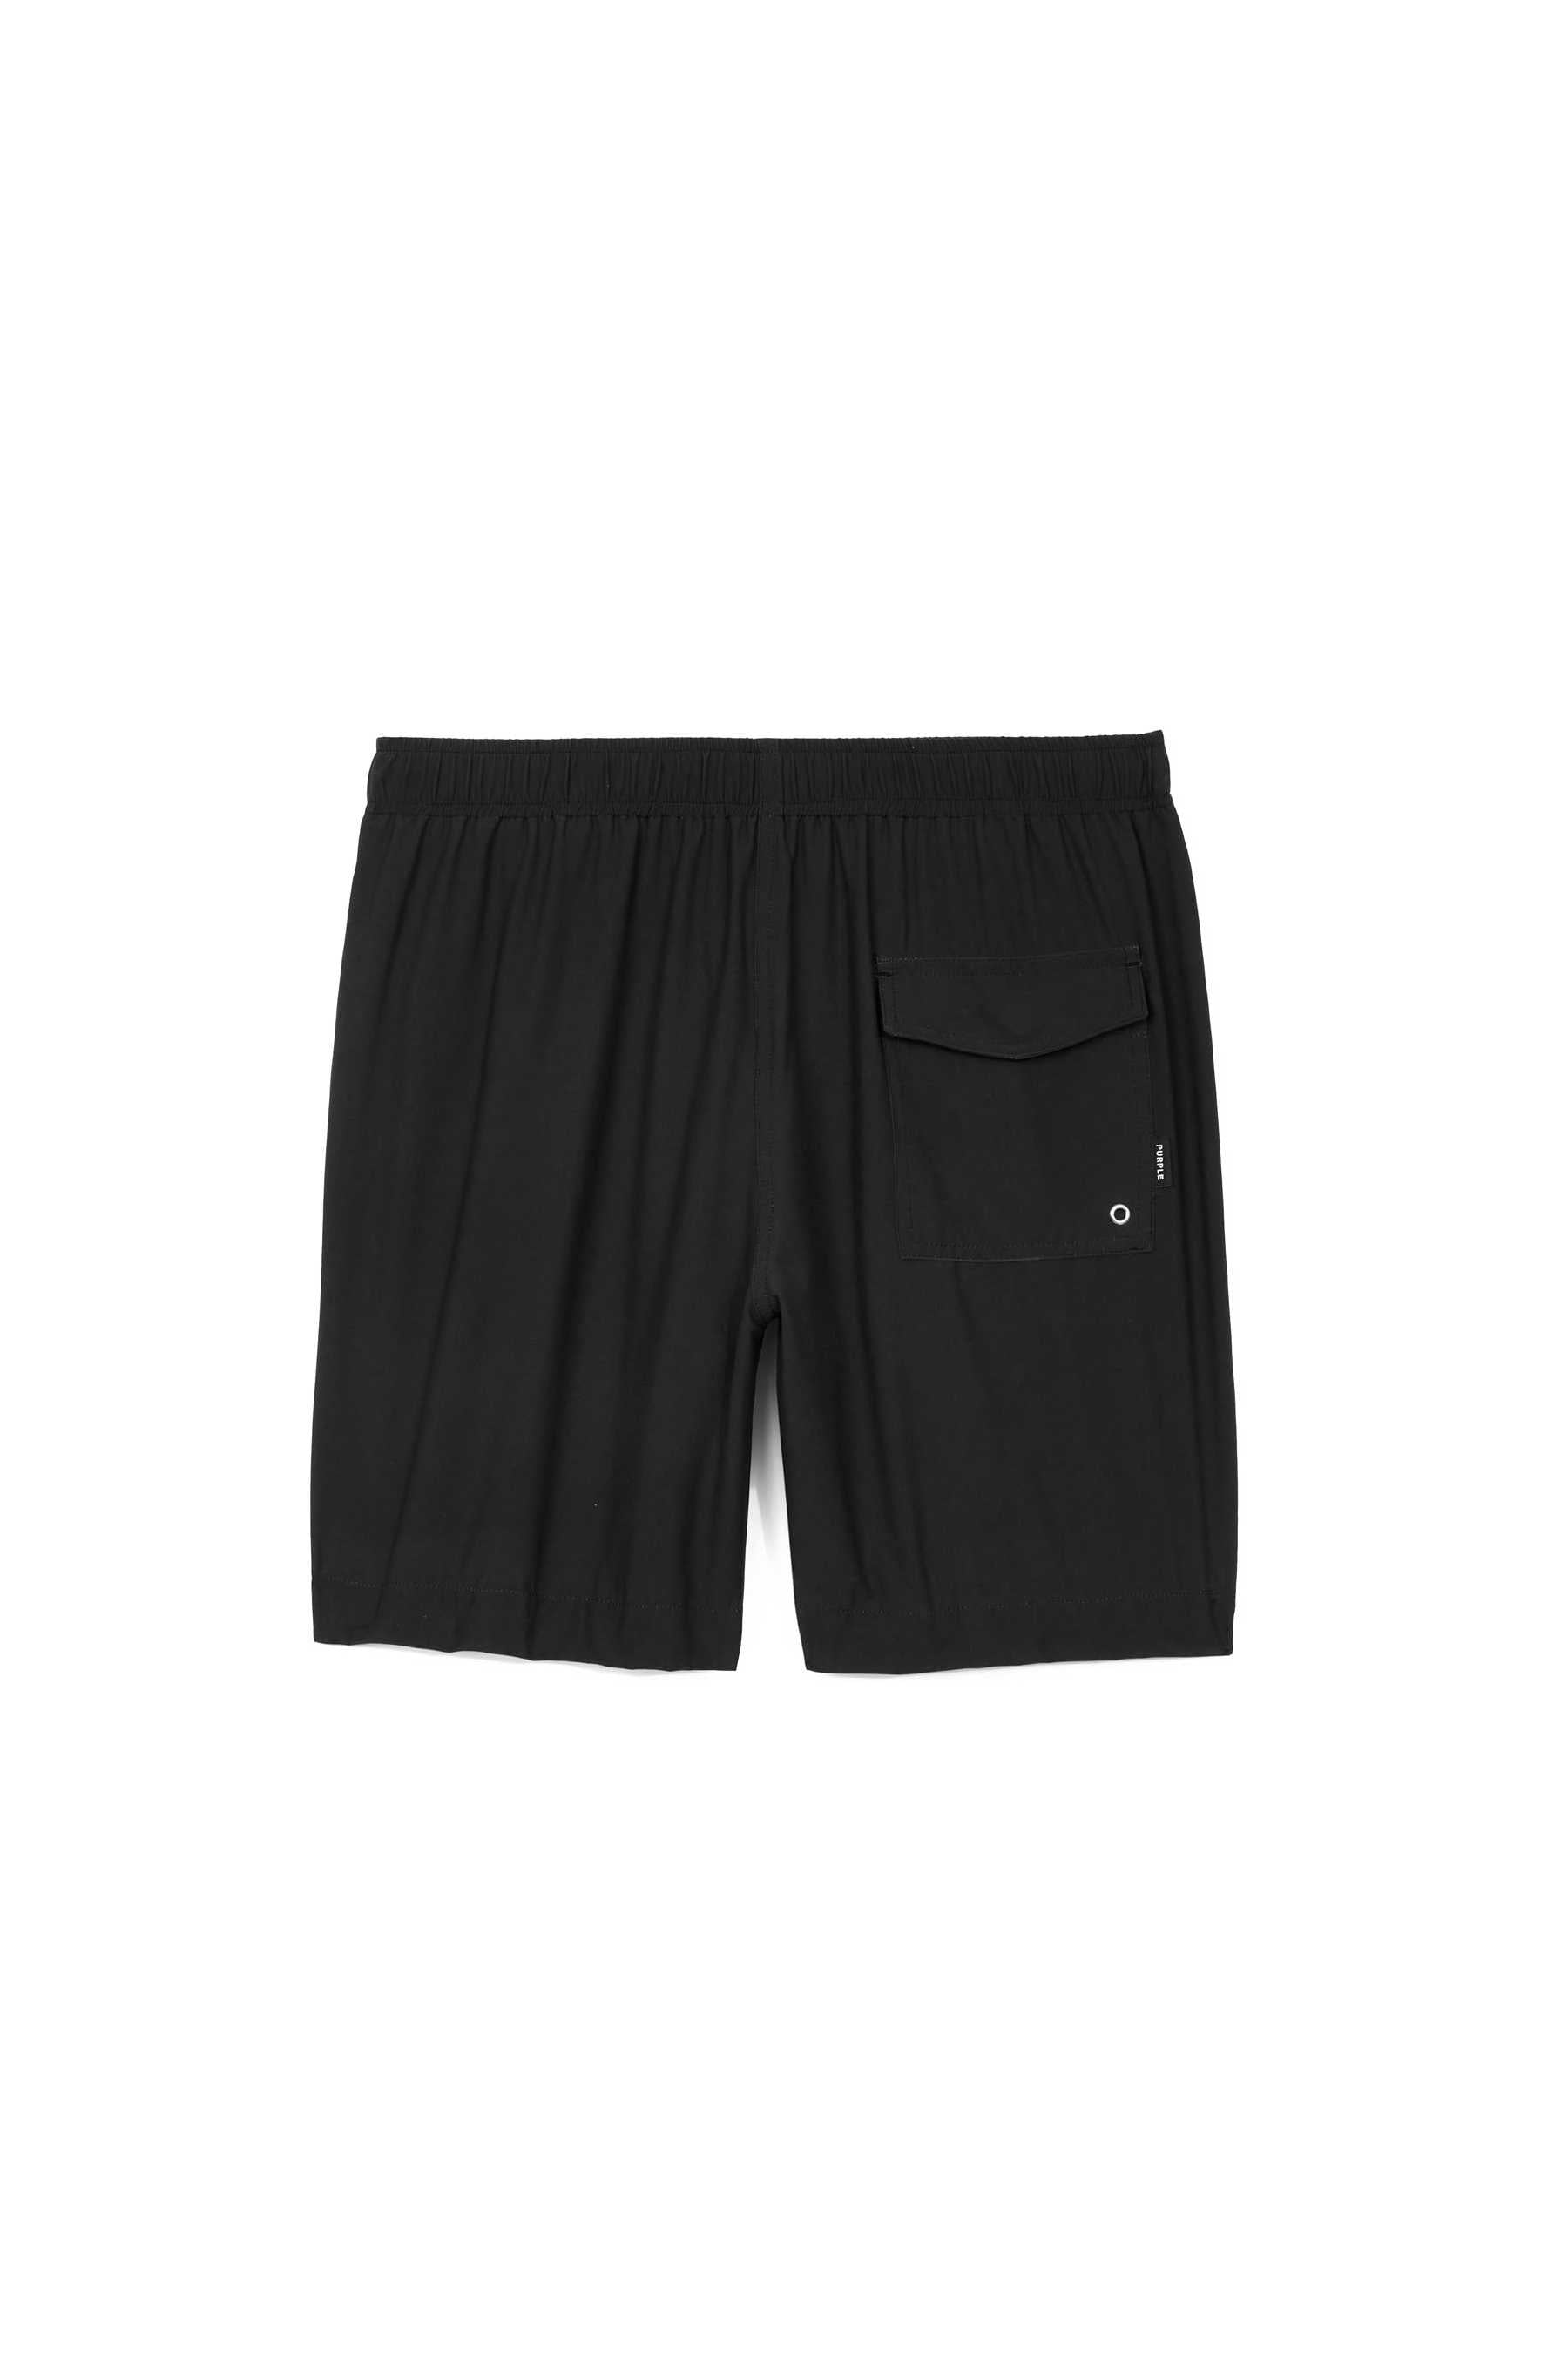 PURPLE BRAND - Men's Swim Short - Style No. P504 - Black Birds Swim Shorts - Back